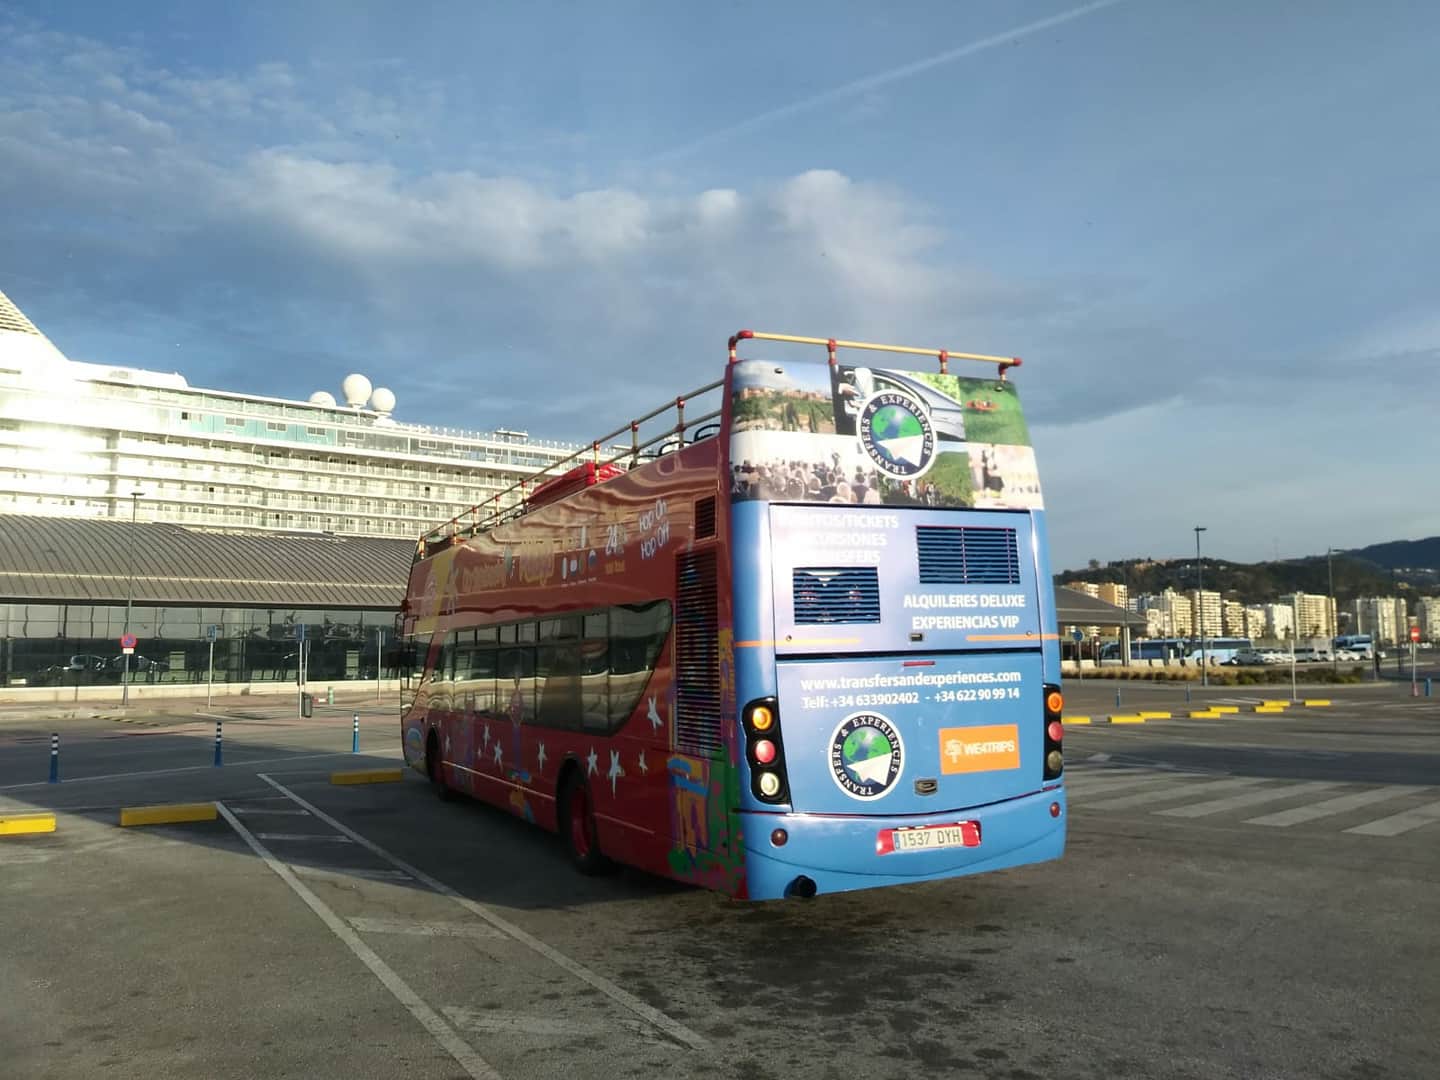 Tour por Benalmádena en autobus turístico - Transfers and Experiences